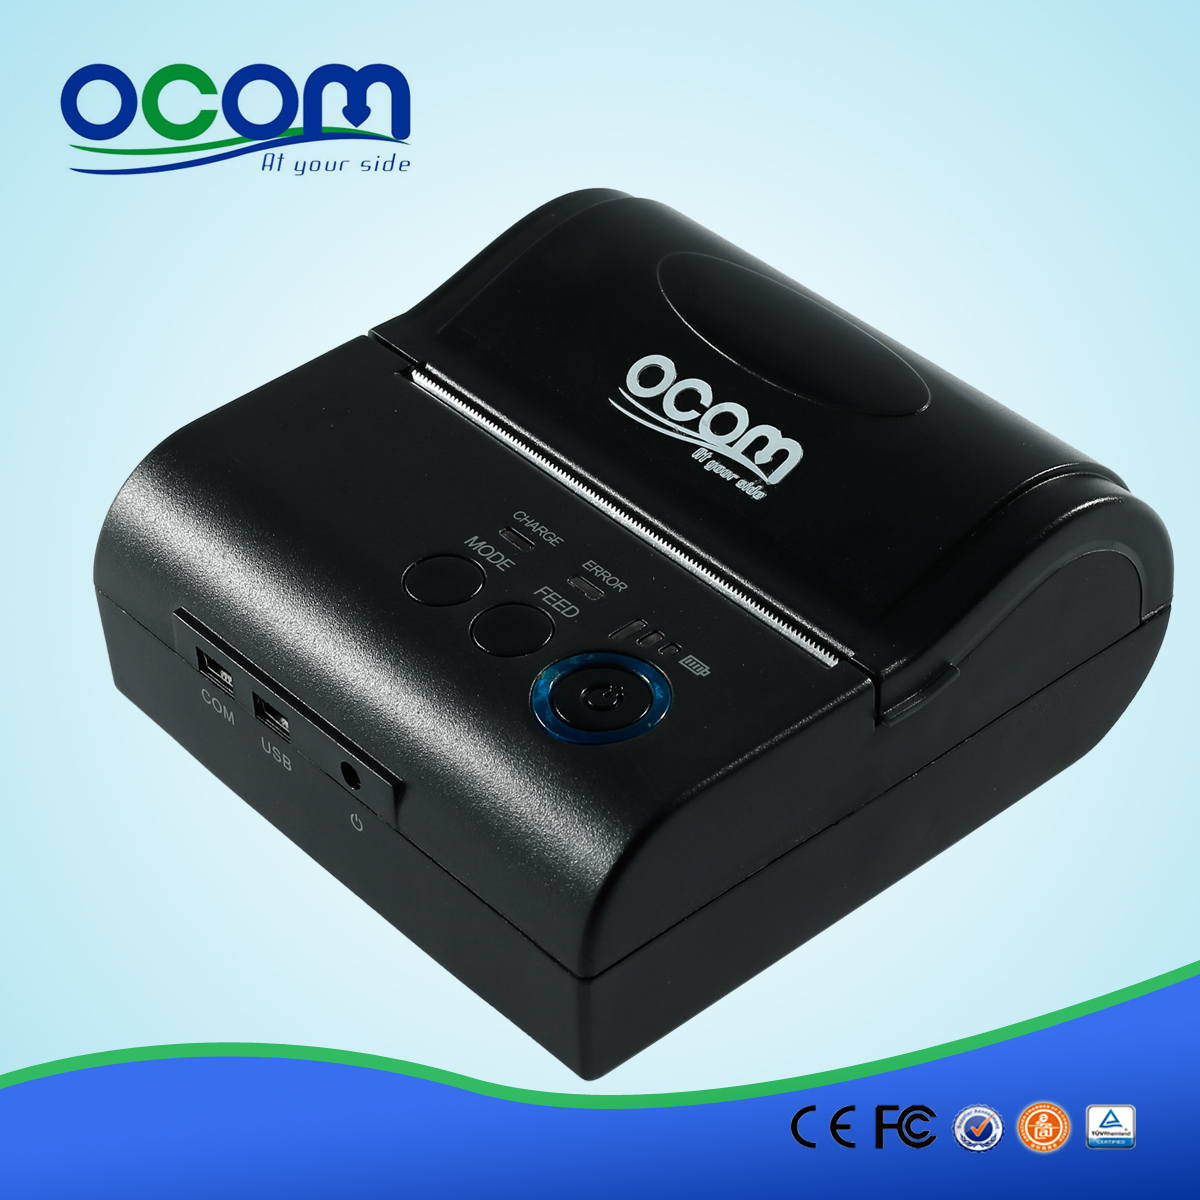 OCPP-M082: OCOM Hot selling cheap 80mm bluetooth printer, bluetooth printer 80mm